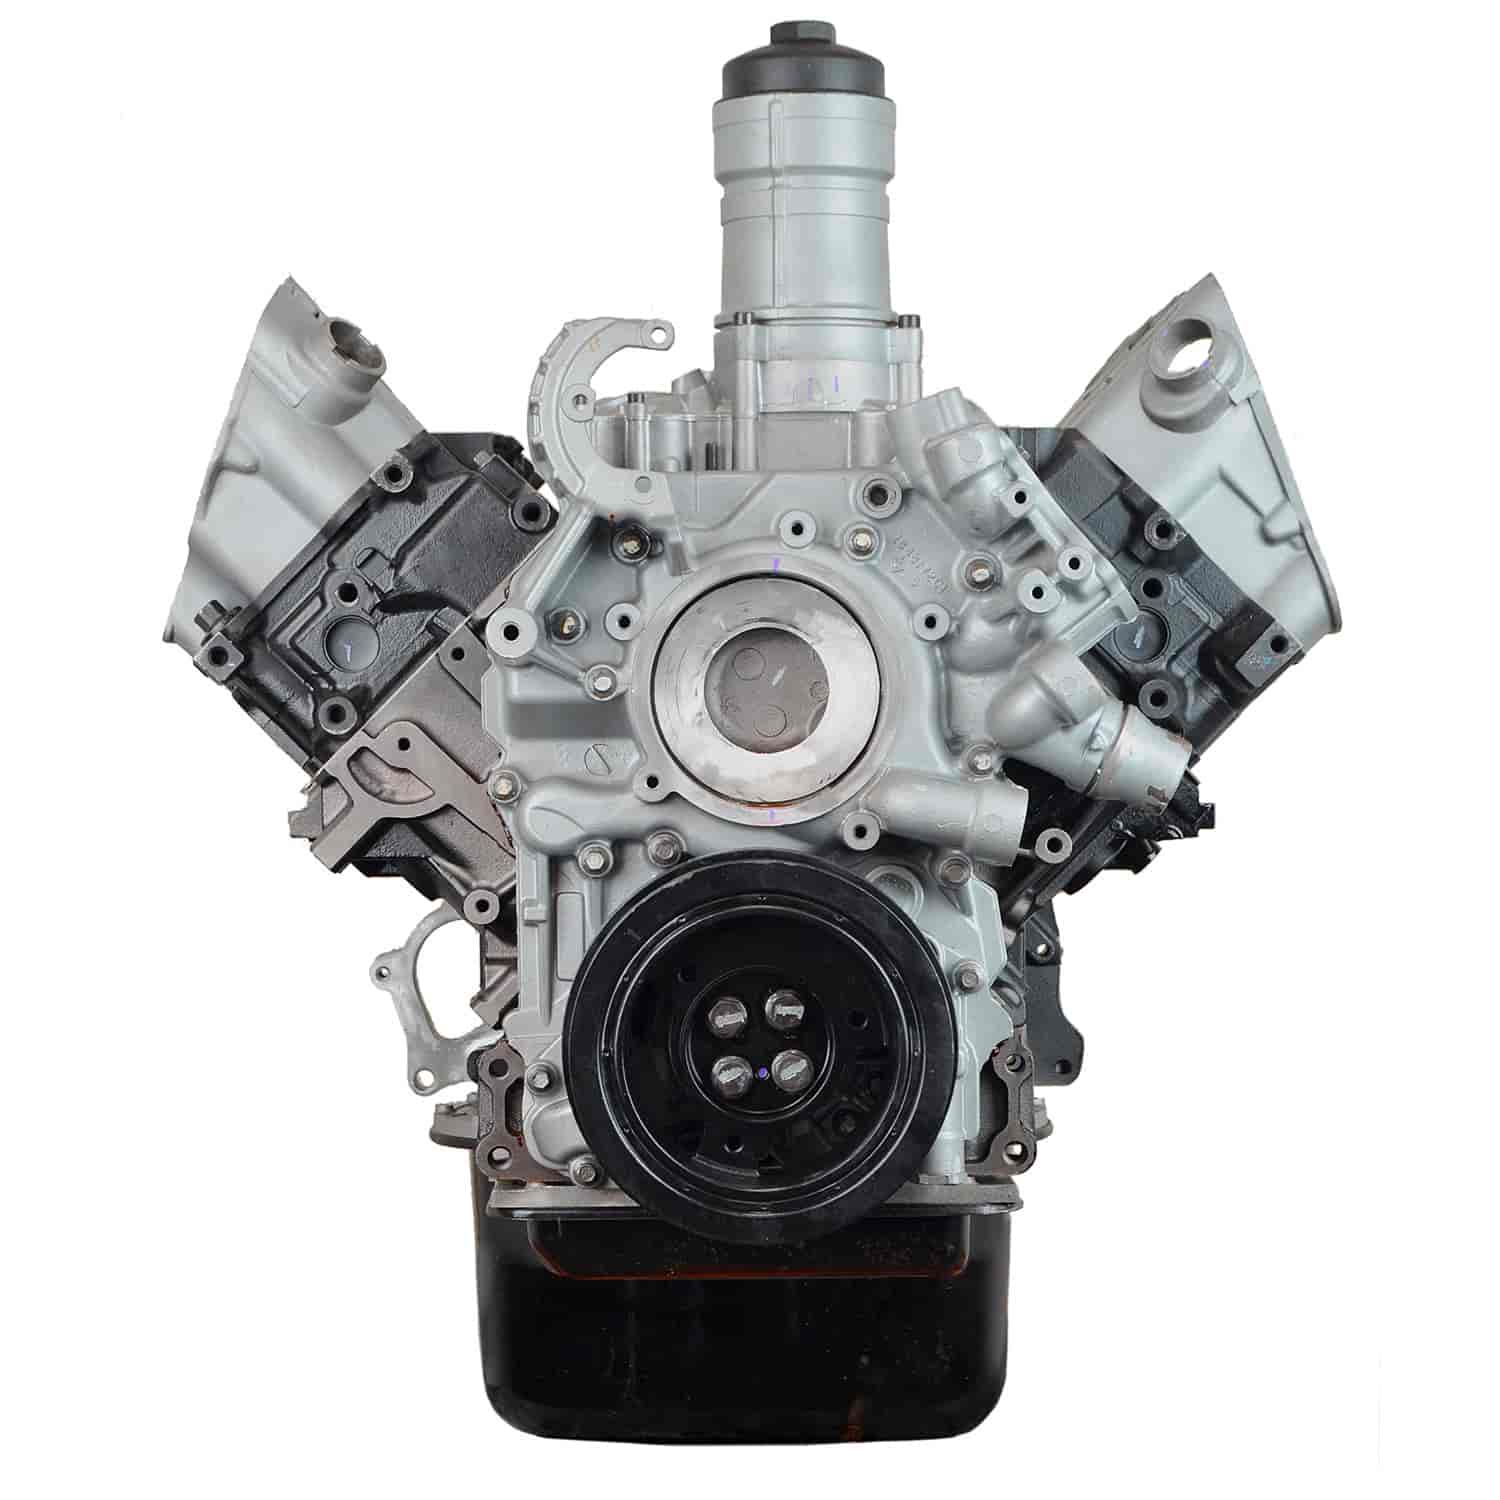 Remanufactured Crate Engine 2008-2010 Ford 6.4L Turbo Diesel V8